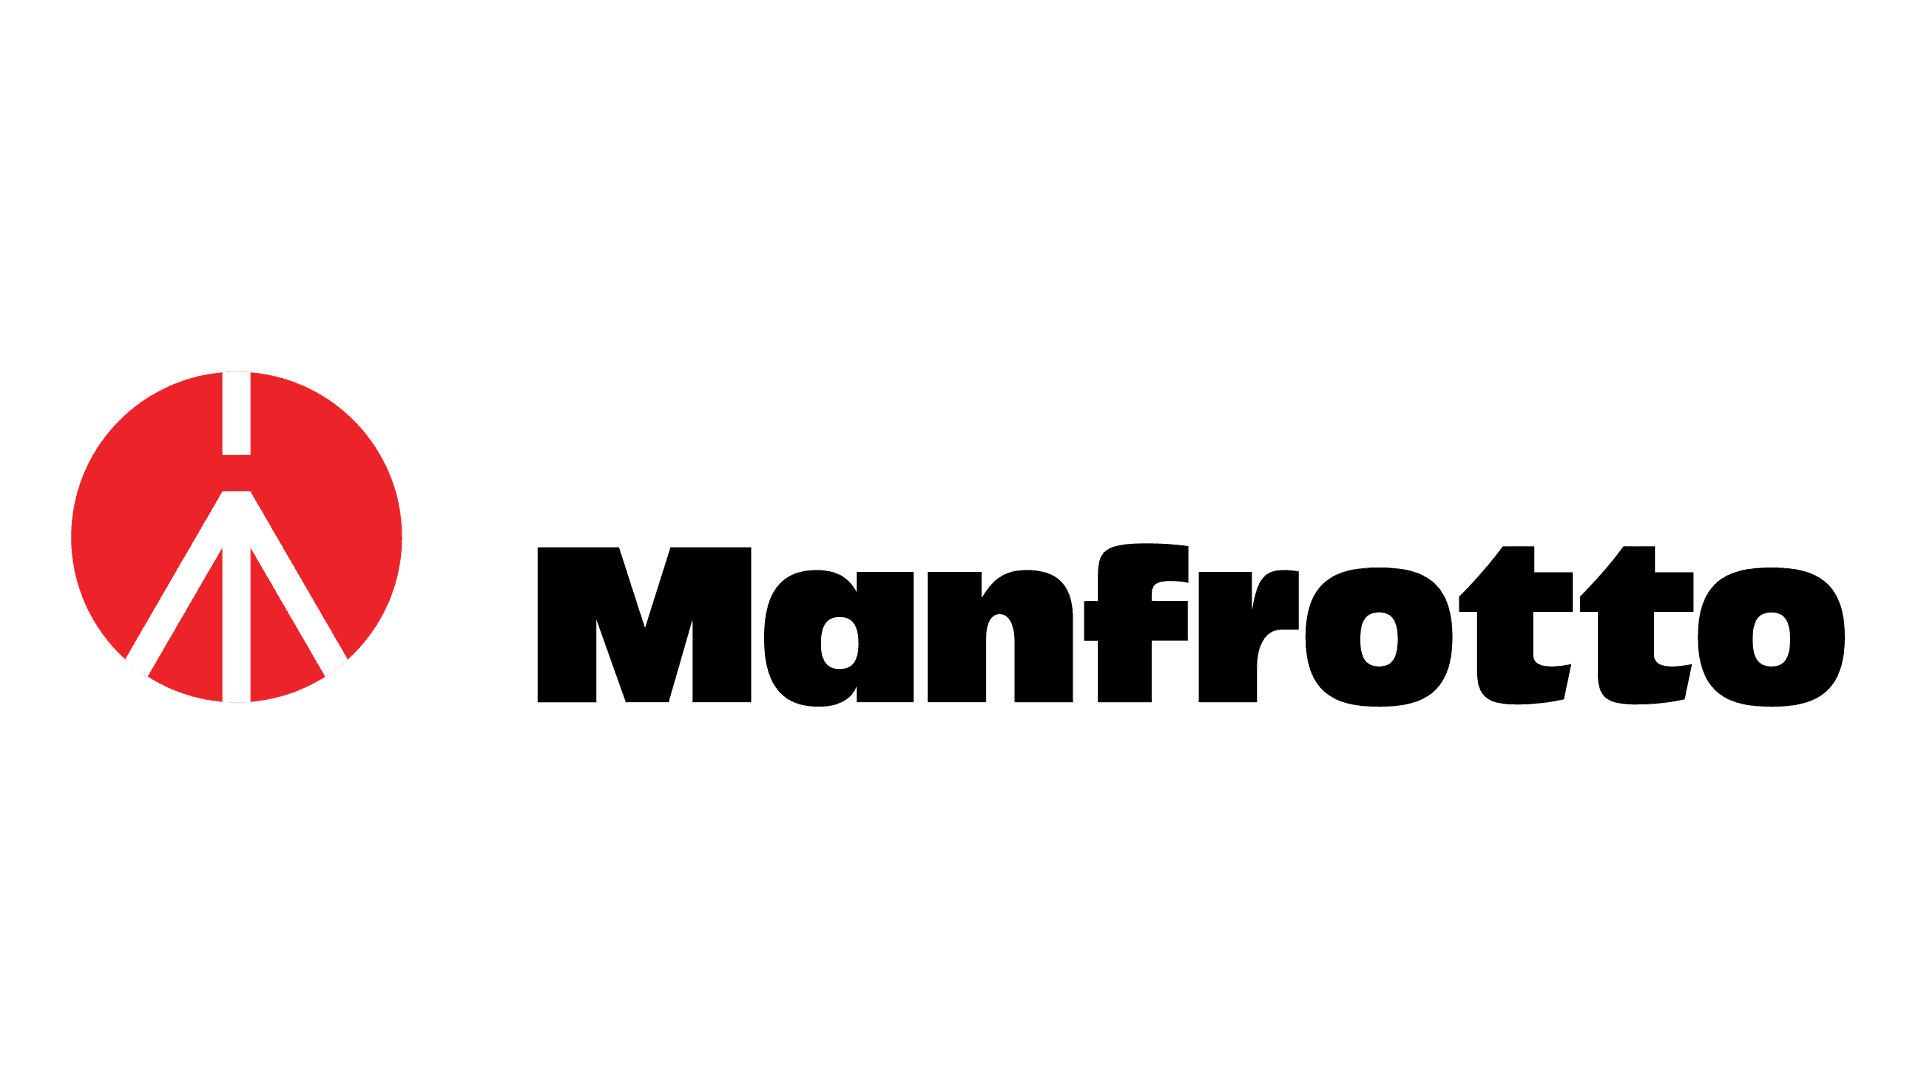 Brand: Manfrotto